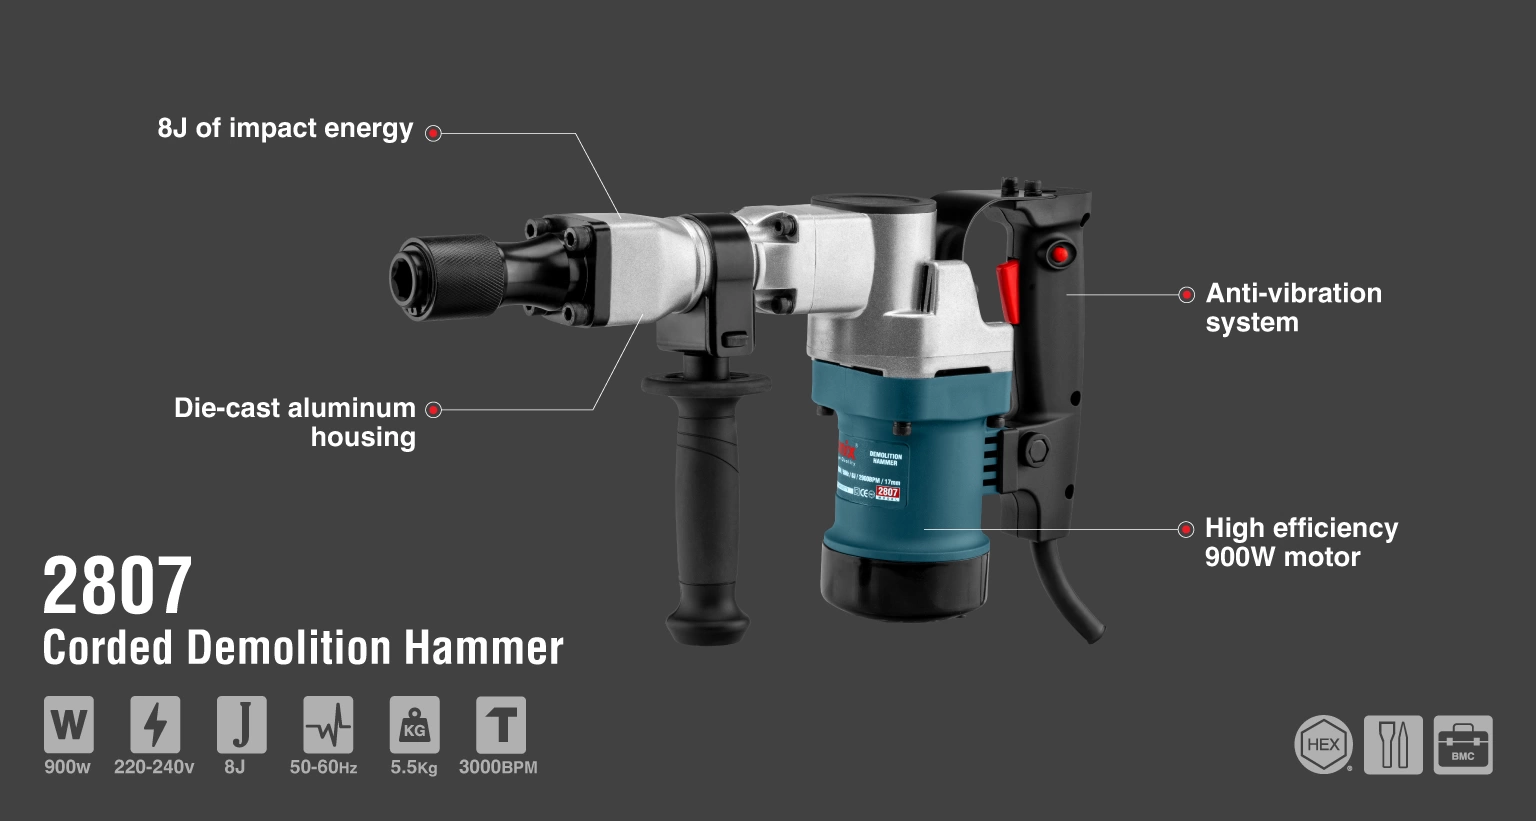 Corded Demolition Hammer,950W, HEX_details